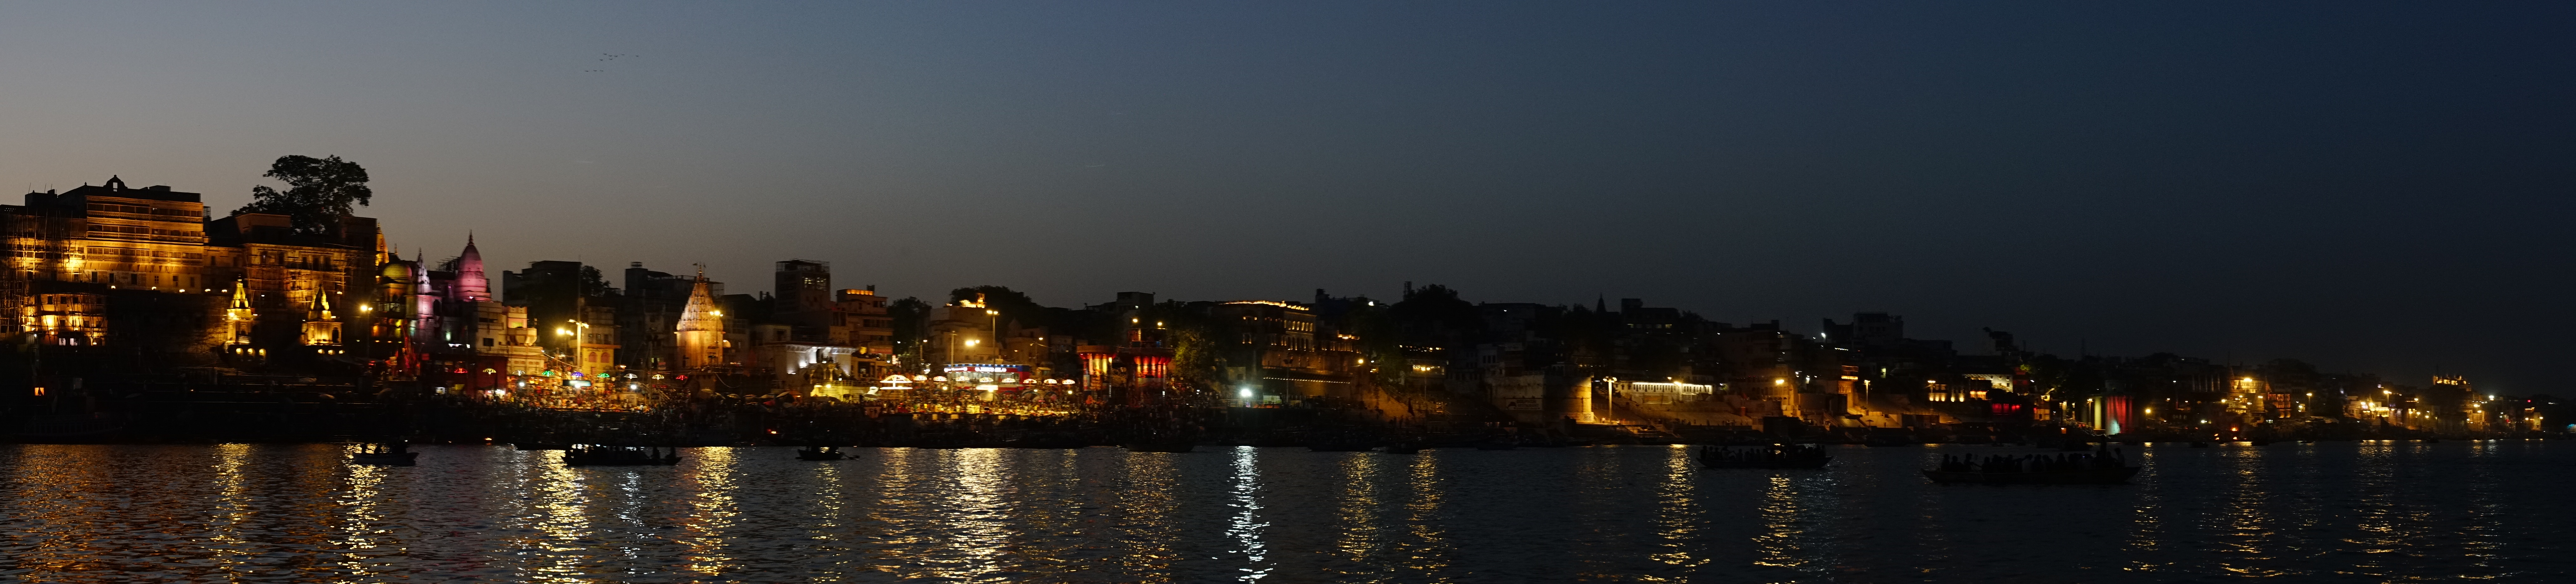 Panorama von Varanasi bei Dunkelheit